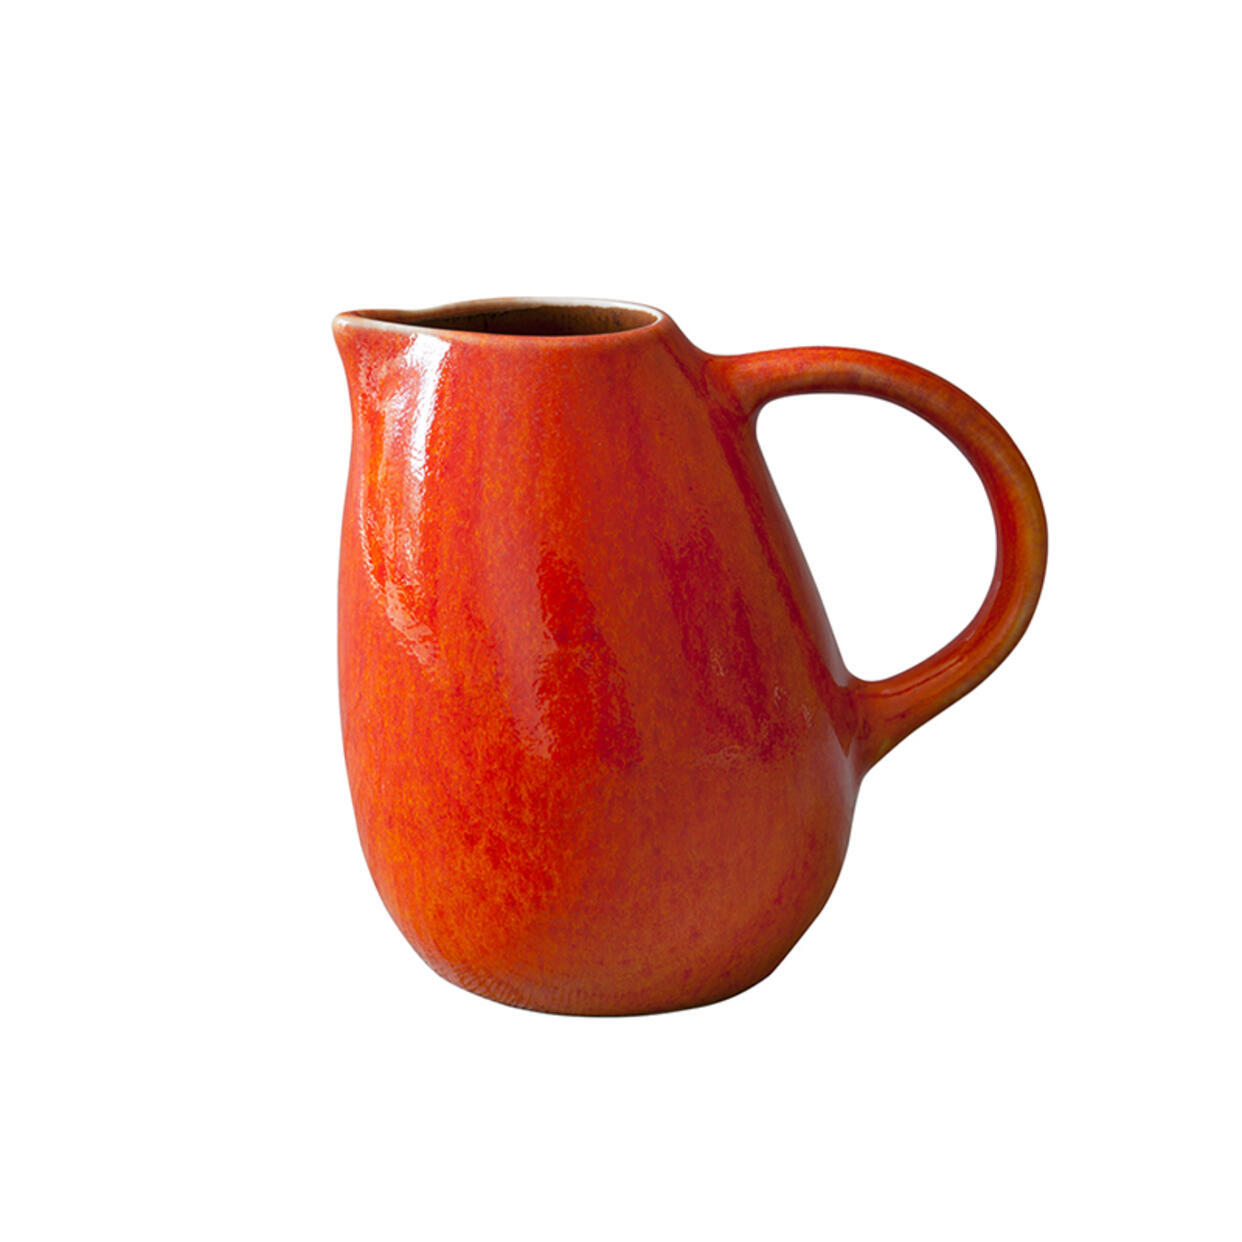 Pitcher M Tourron orange buy ceramics online